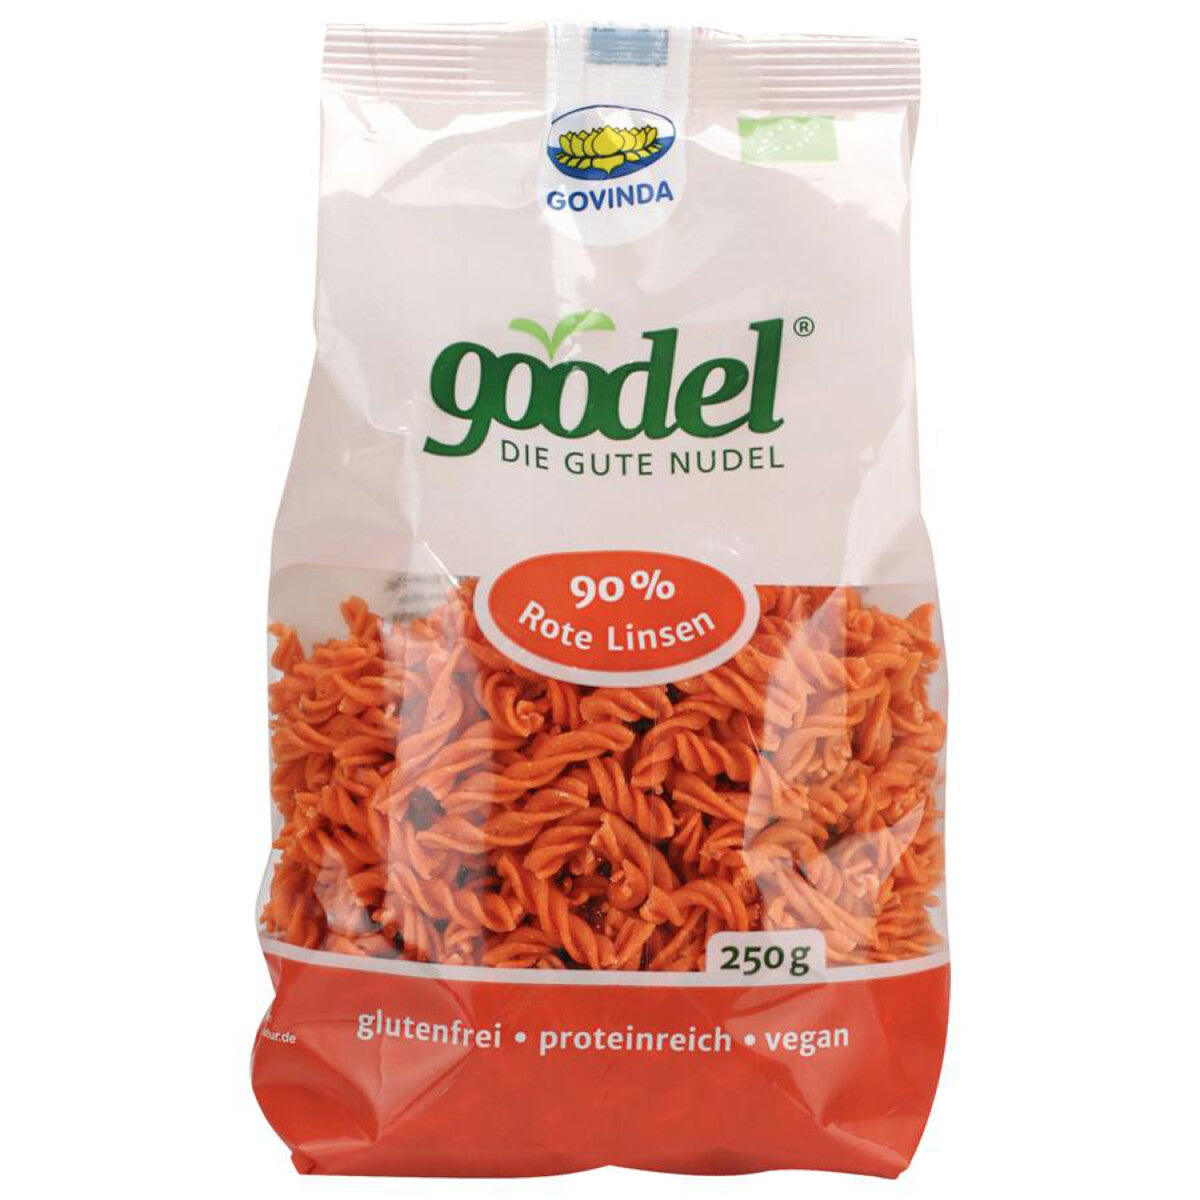 GOVINDA GOODEL Rote Linsen Spiralen - 250 g